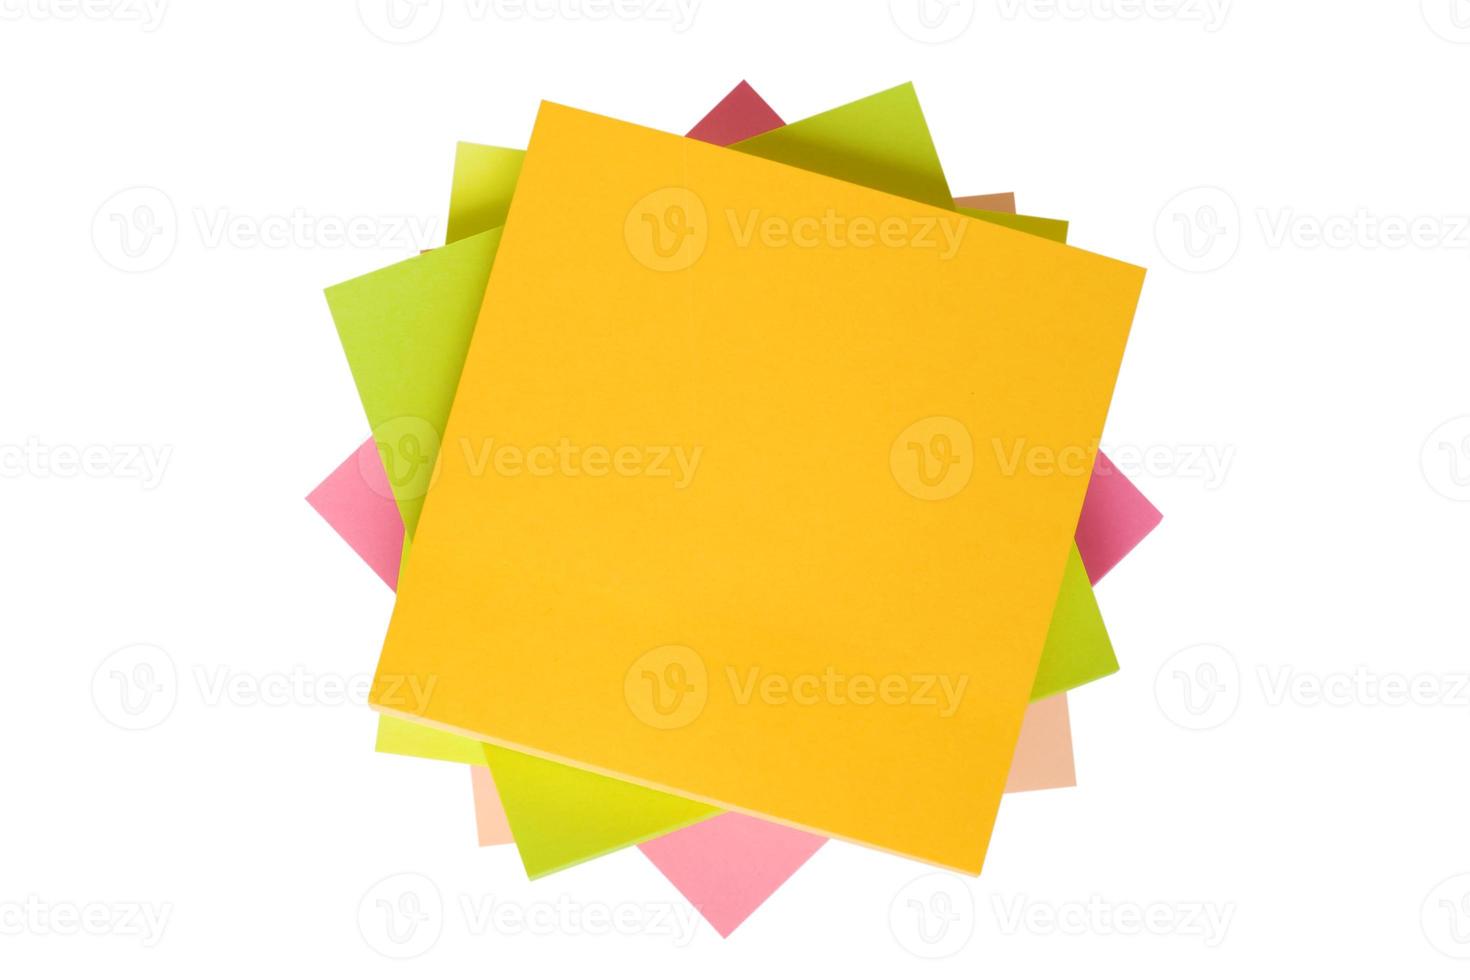 vista superior de papéis de nota adesiva coloridos isolados no branco foto